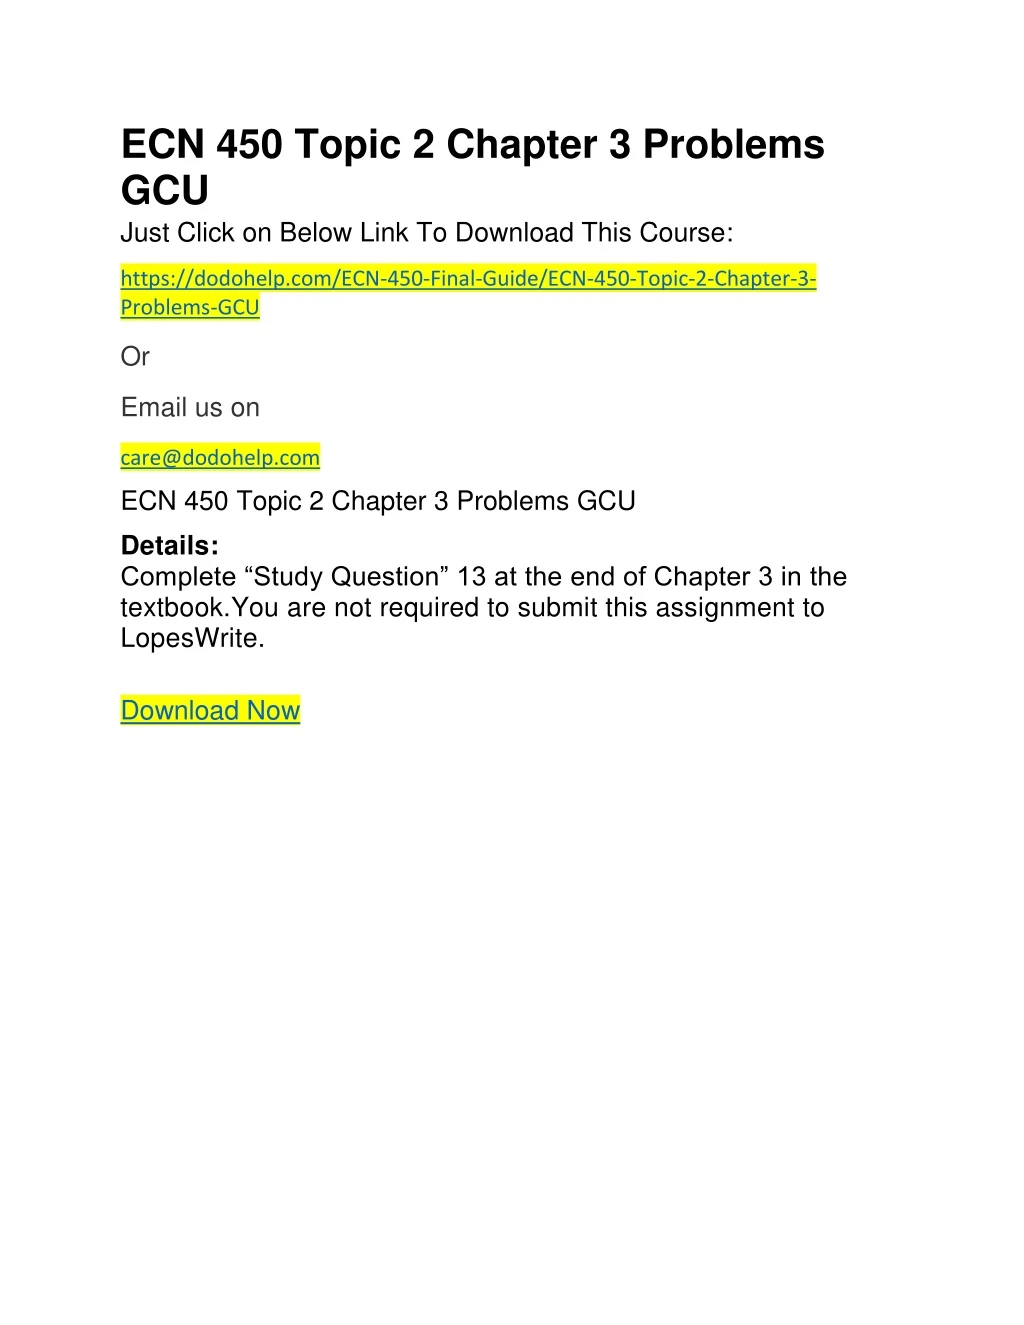 ecn 450 topic 2 chapter 3 problems gcu just click